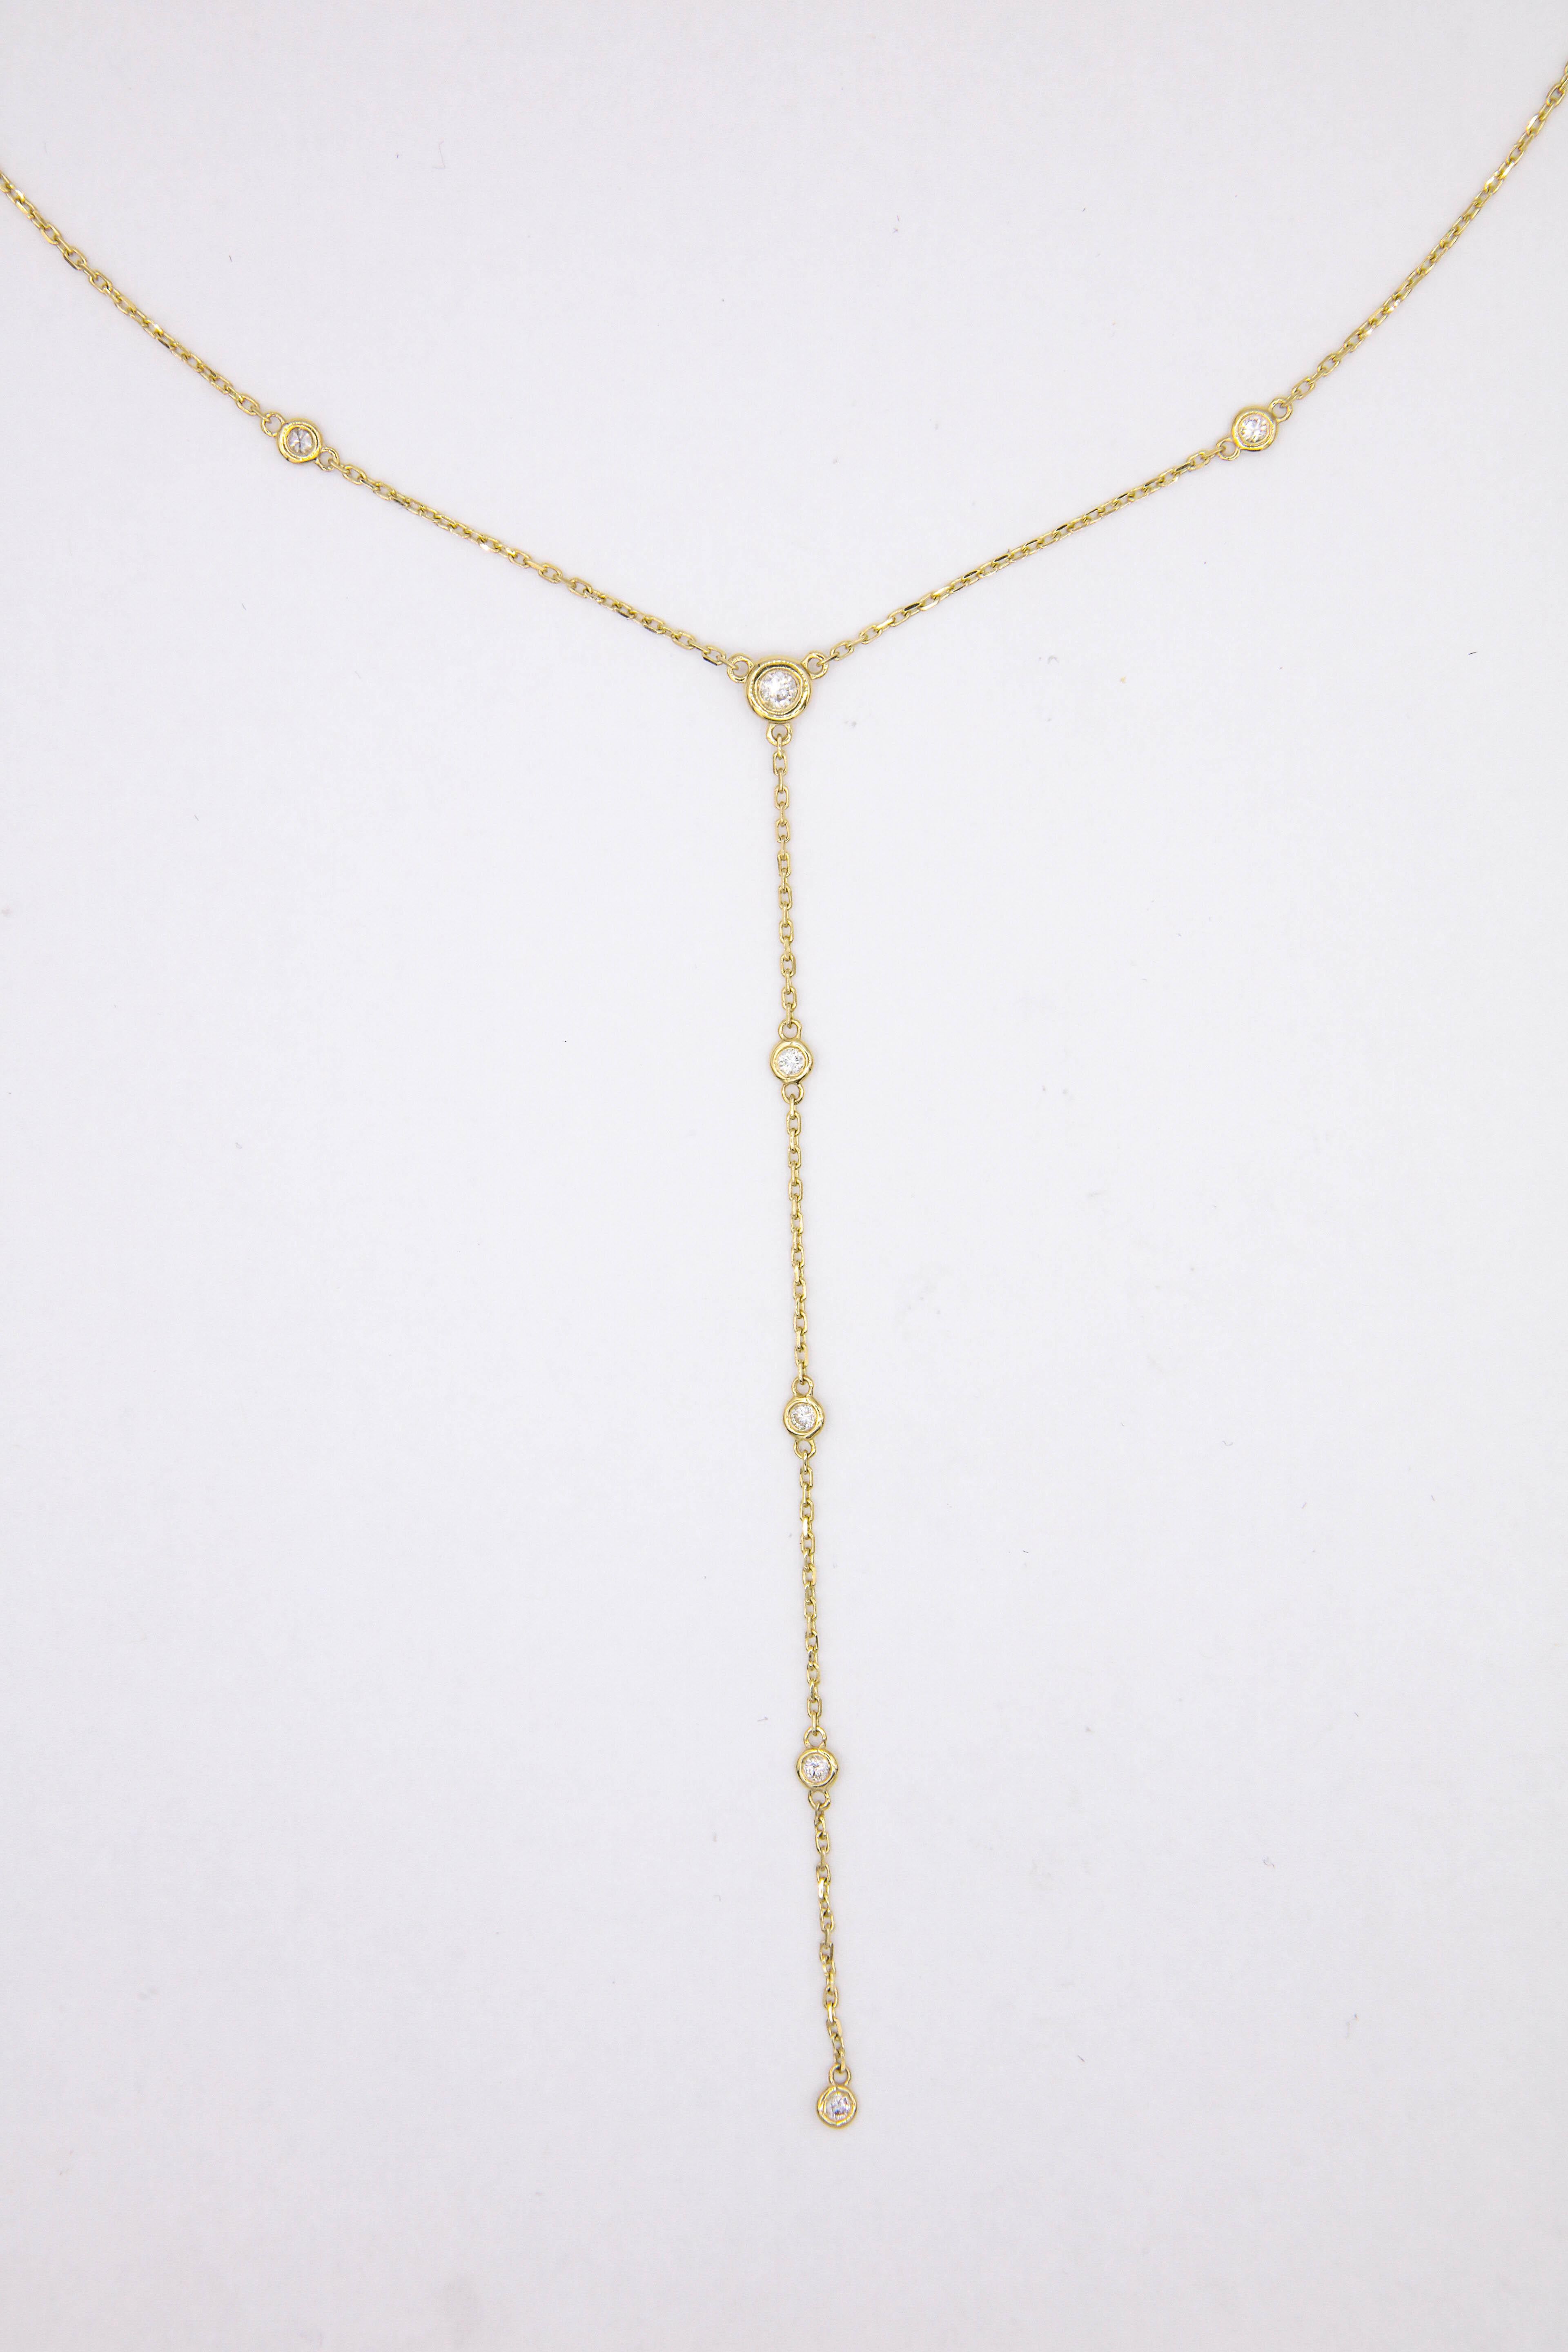 Women's Yellow Gold Lariat Diamond Necklace 0.55 Carat